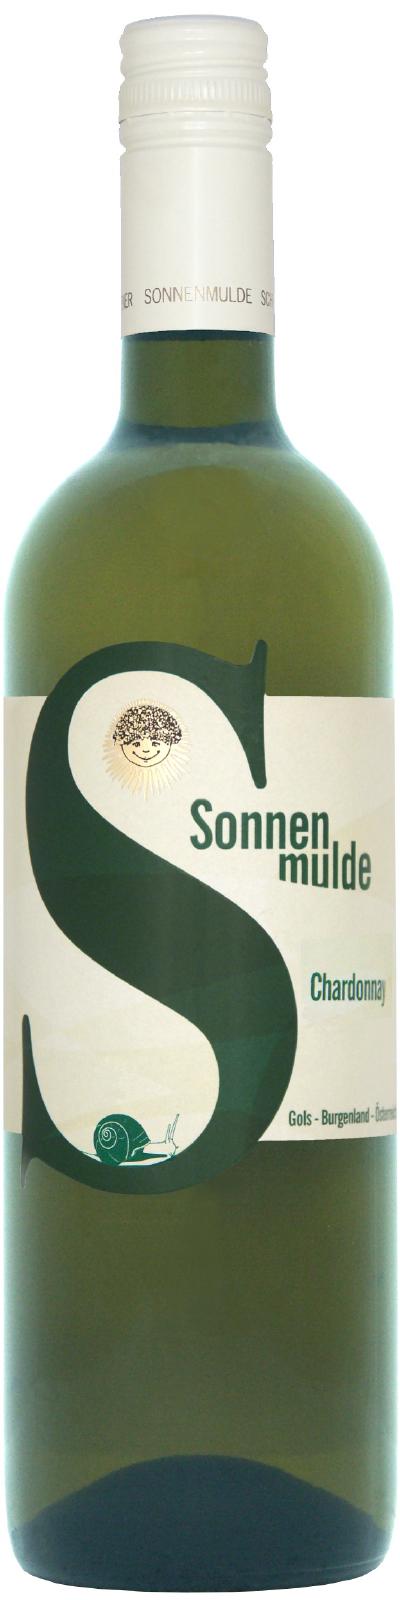 A bottle of Chardonnay